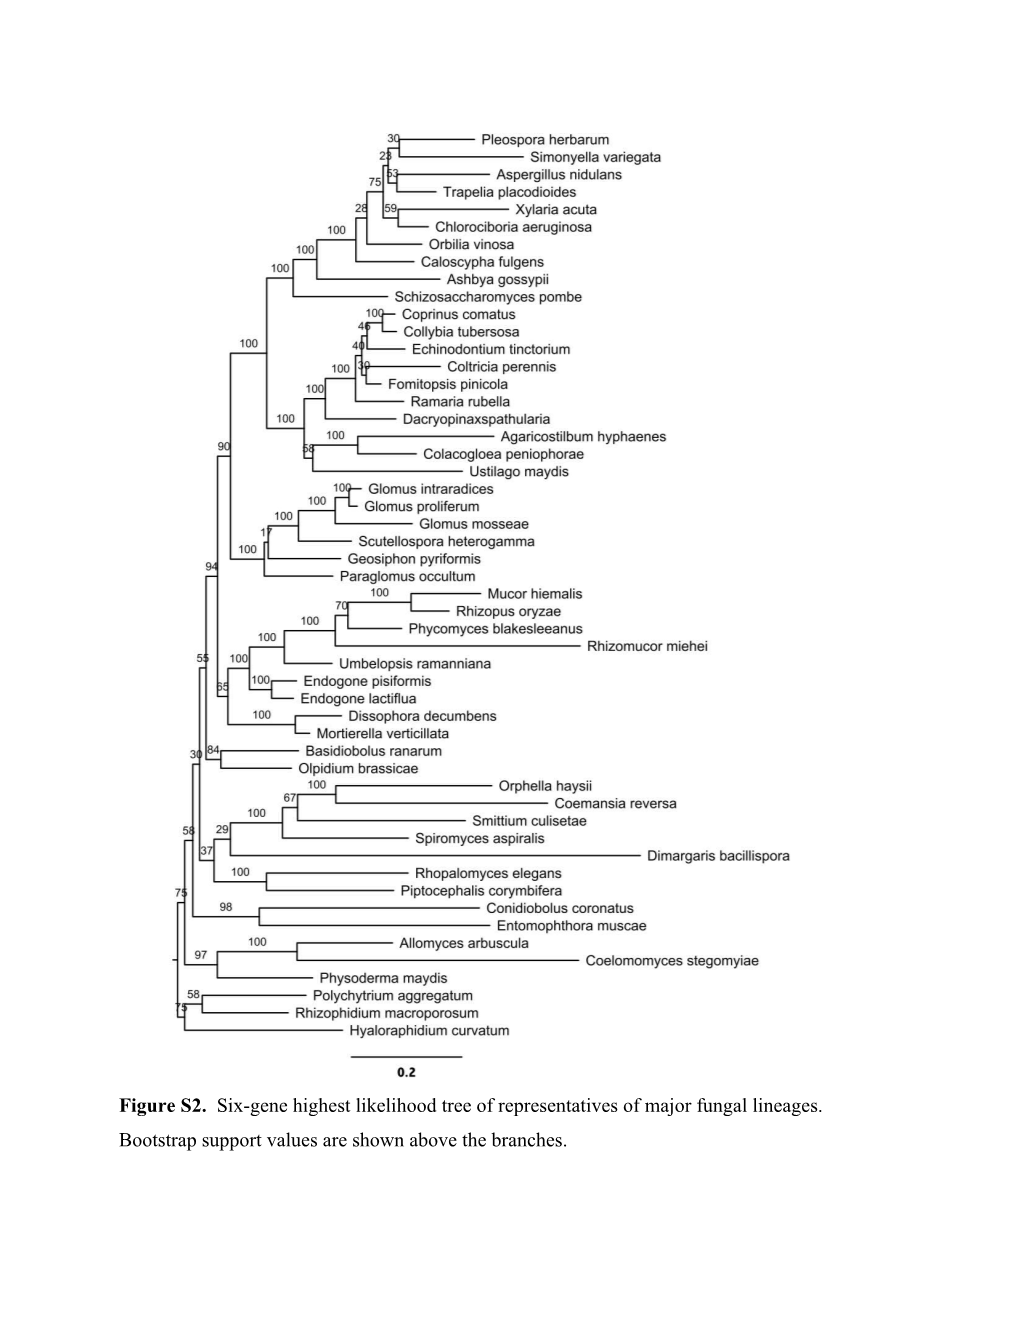 Figure S1. Representative Plant-Symbiotic Mucoromycotina Detected in This Study. Gene Tree